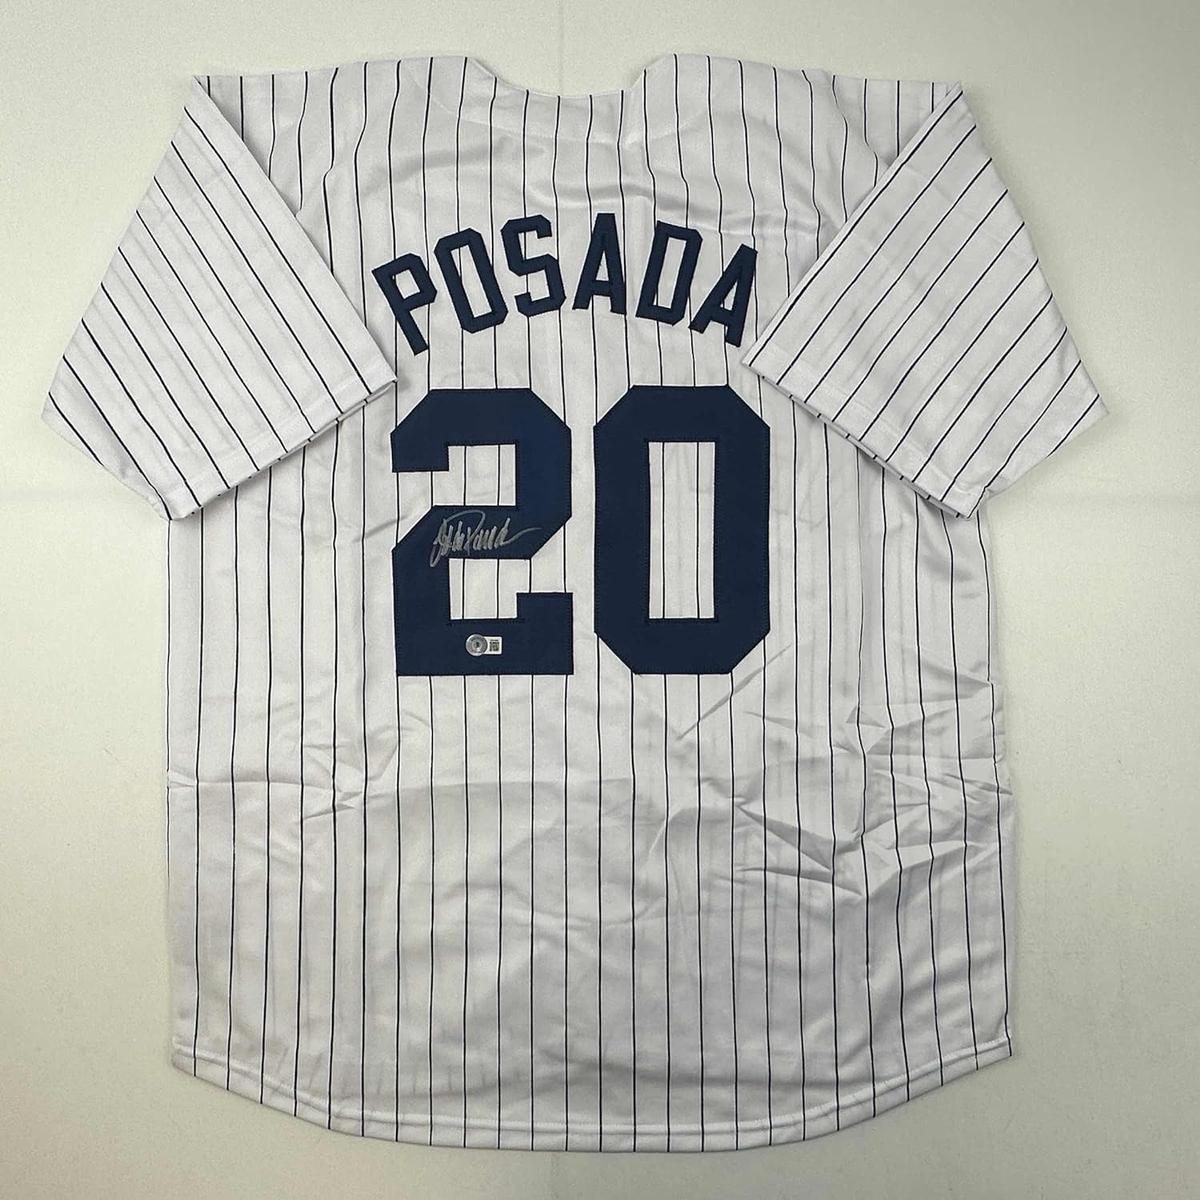 Autographed/Signed Jorge Posada New York Pinstripe Baseball Jersey Beckett BAS COA